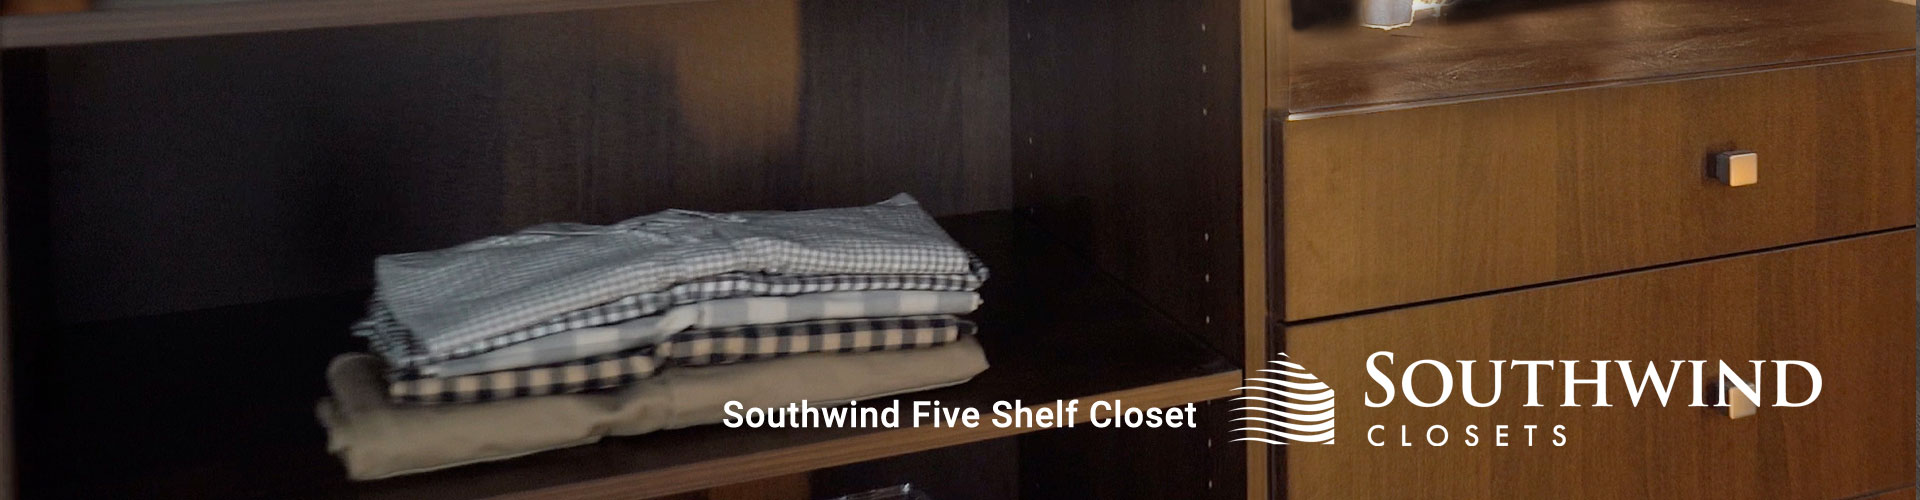 Southwind Five Shelf Closet hero